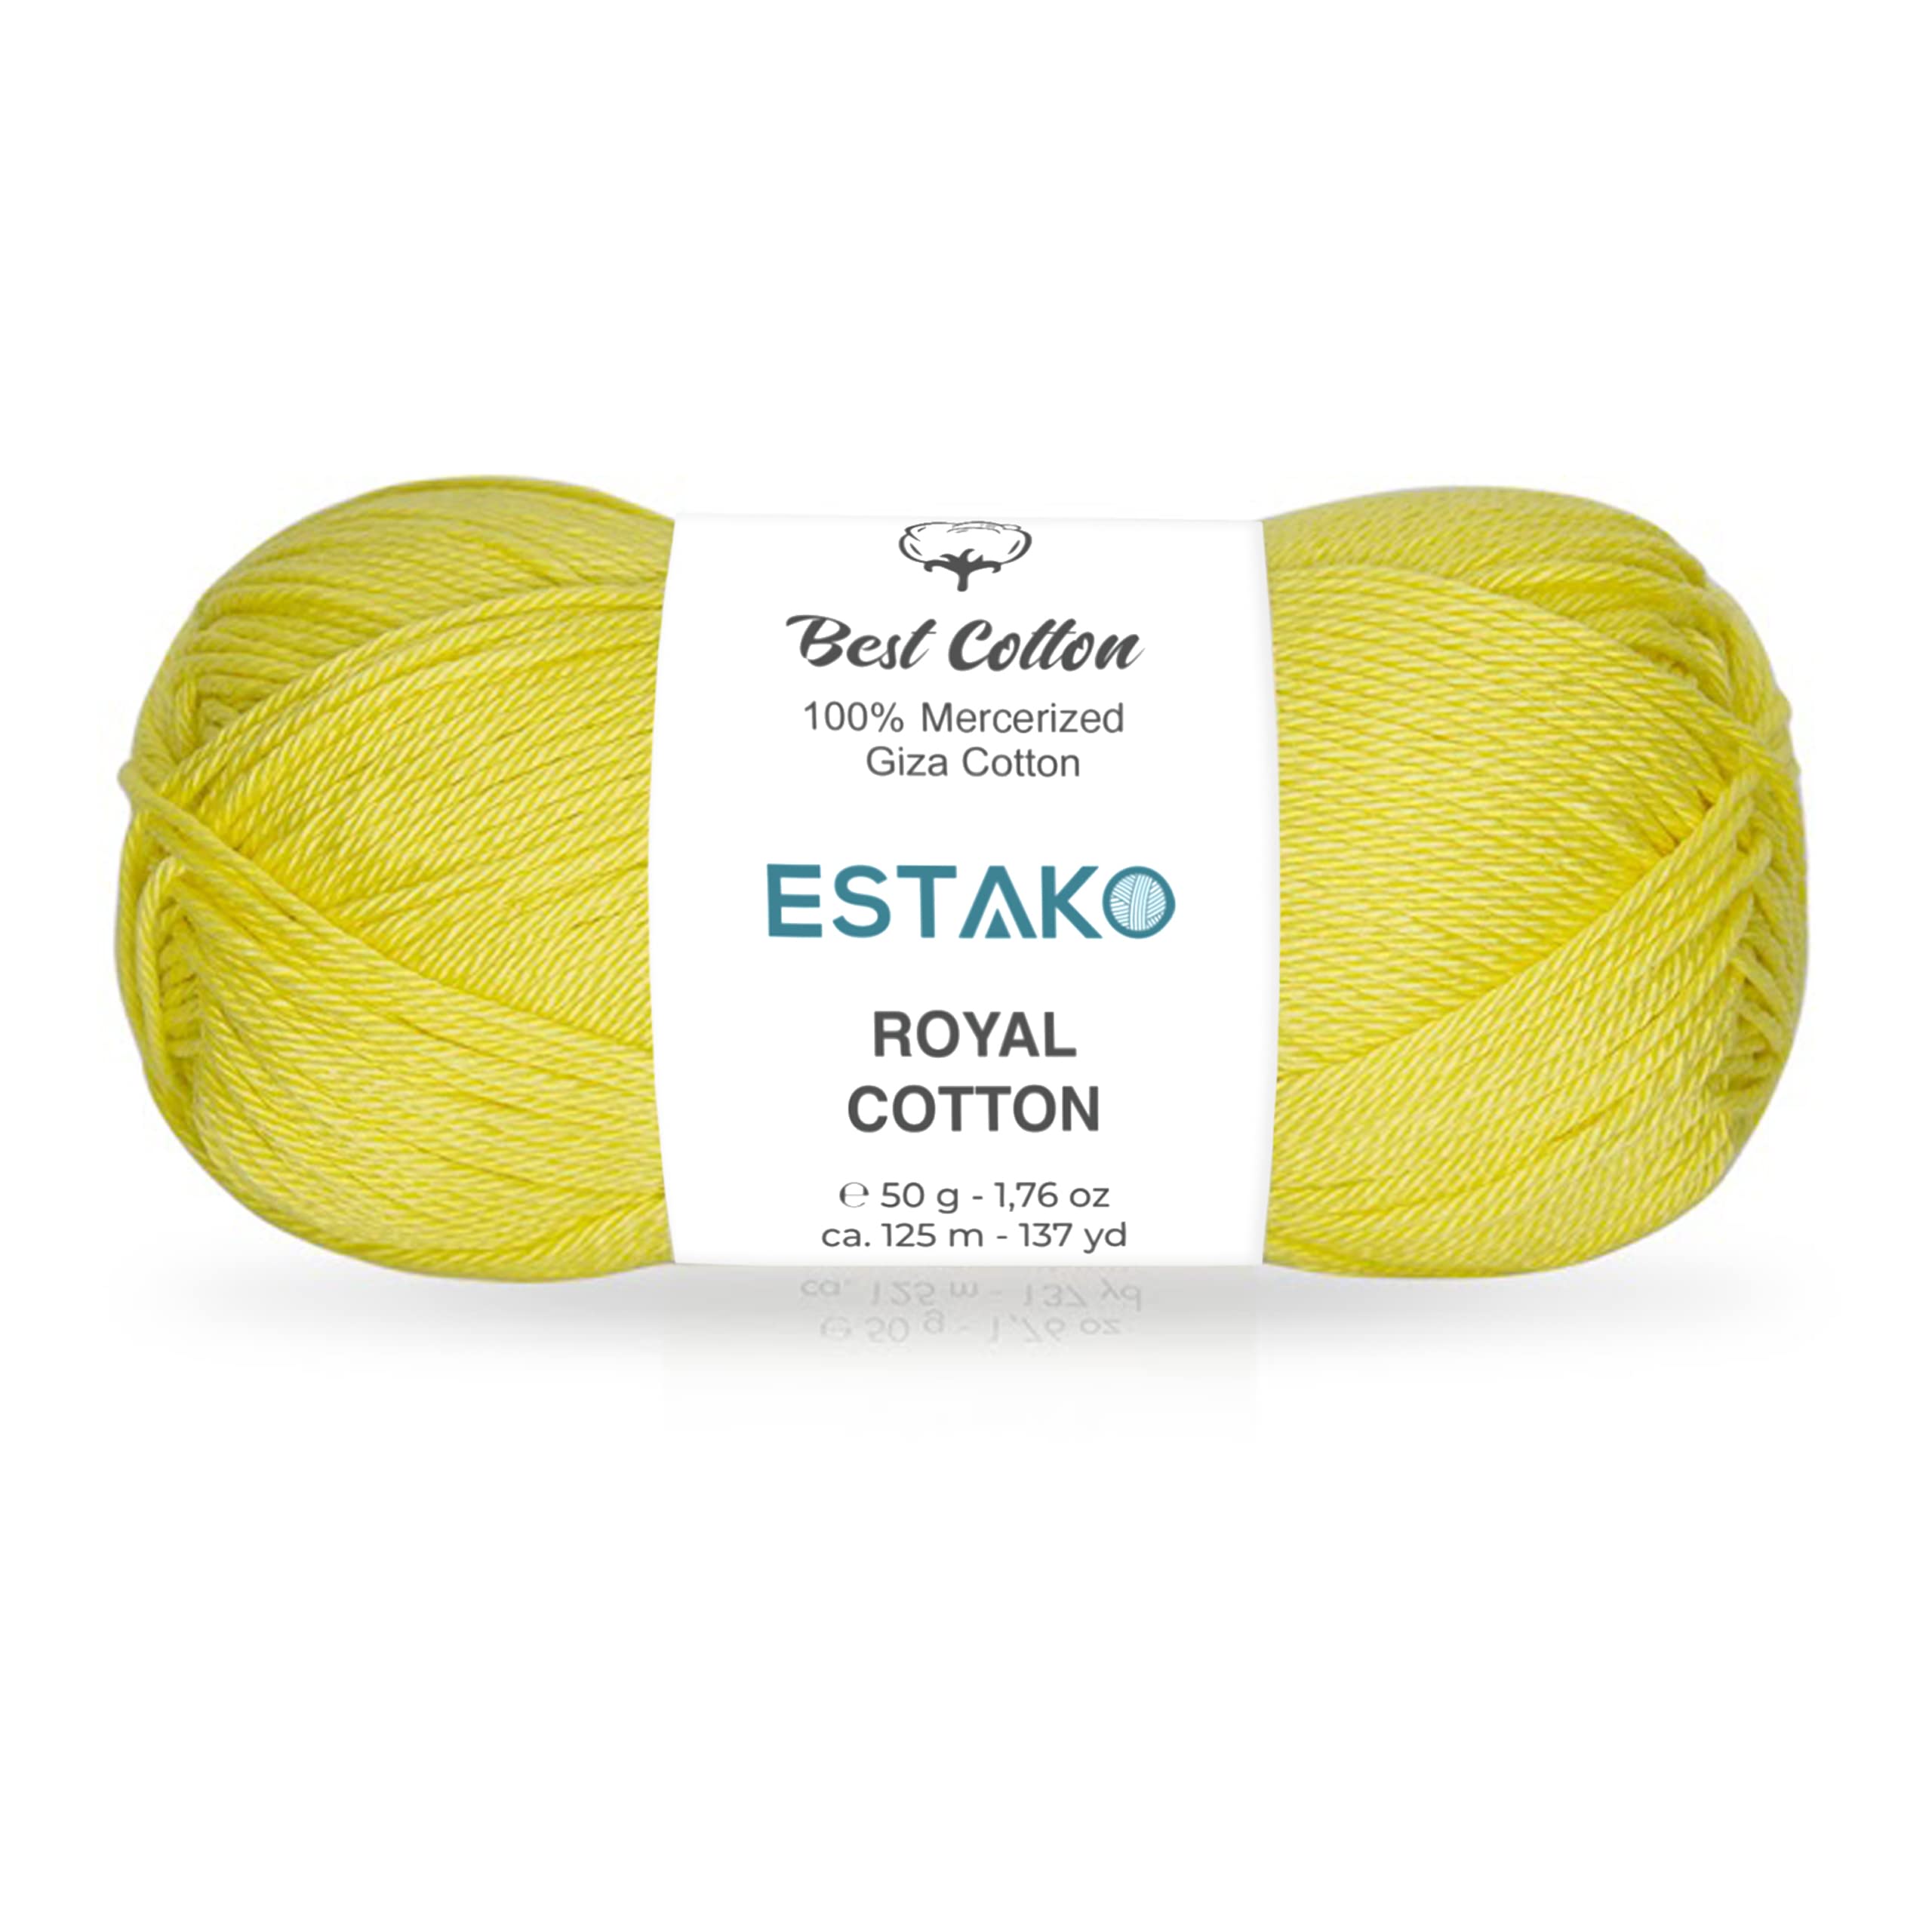 Estako Royal cotton, 100% Mercerized giza cotton Yarn, Soft, Super Fino 1 for crochet and Knitting 176 Oz (50g) 137 Yrds (125m) 